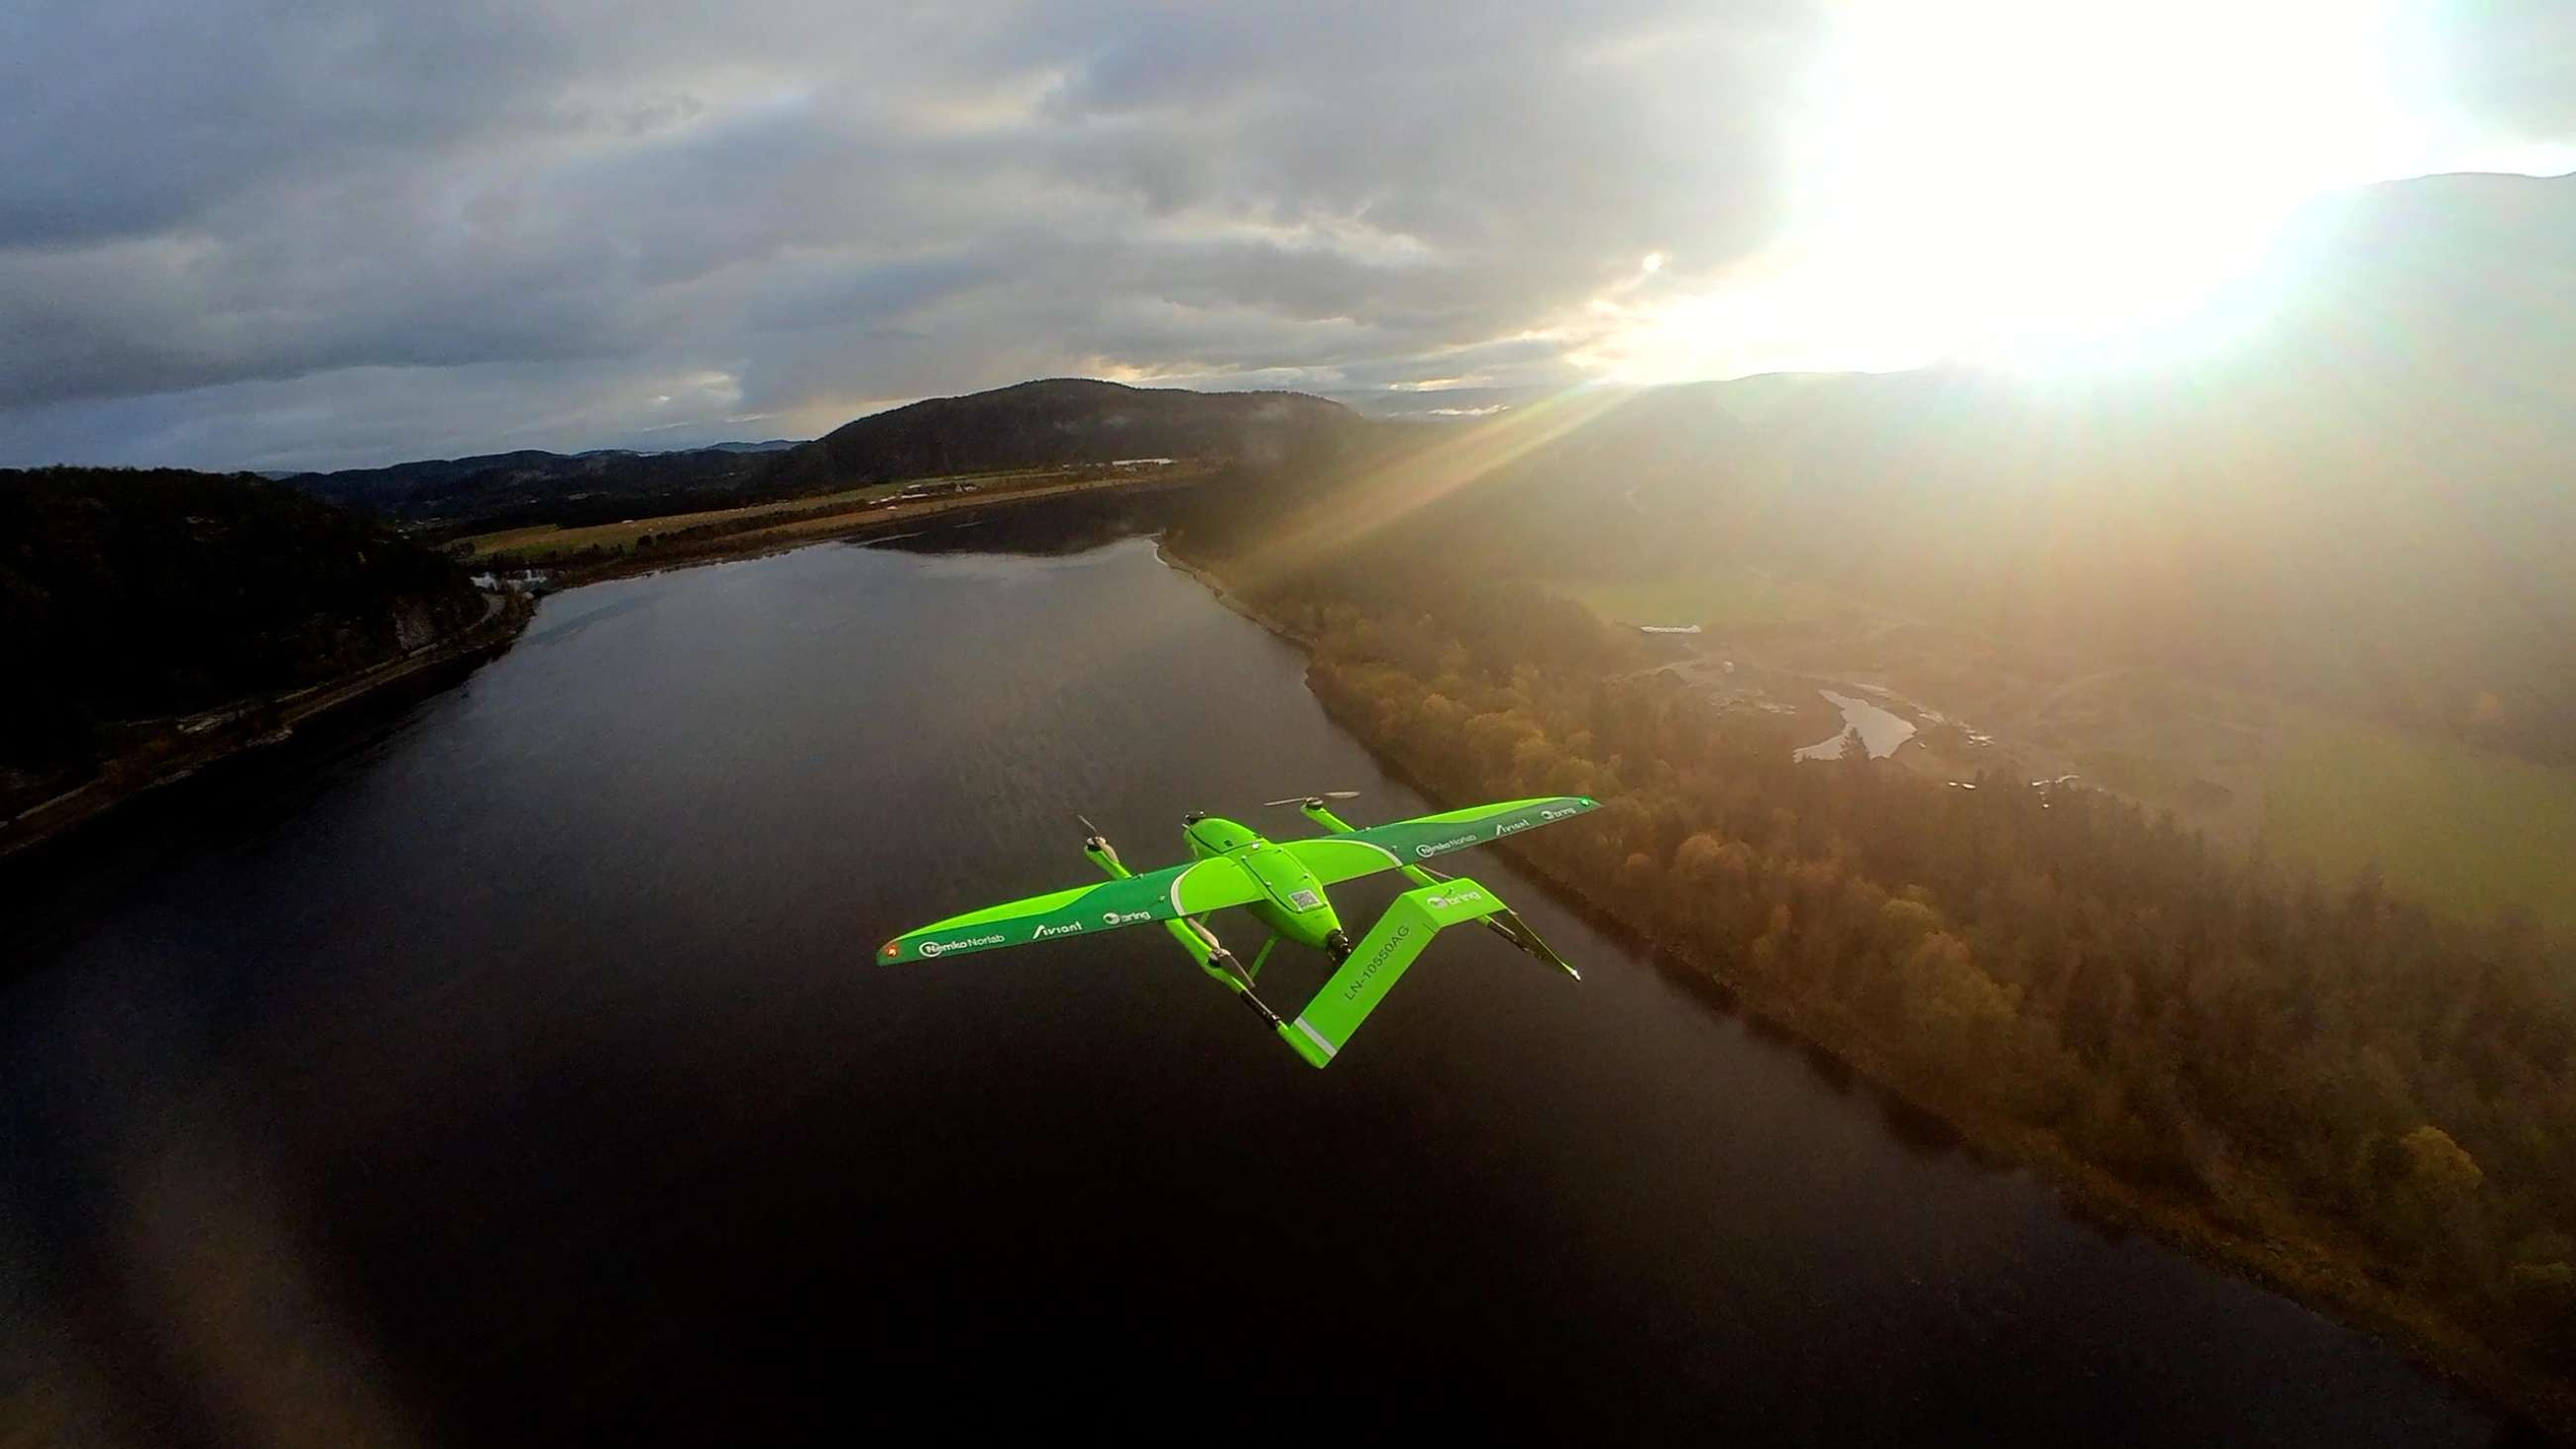 Drone i luften over Snåsavatnet